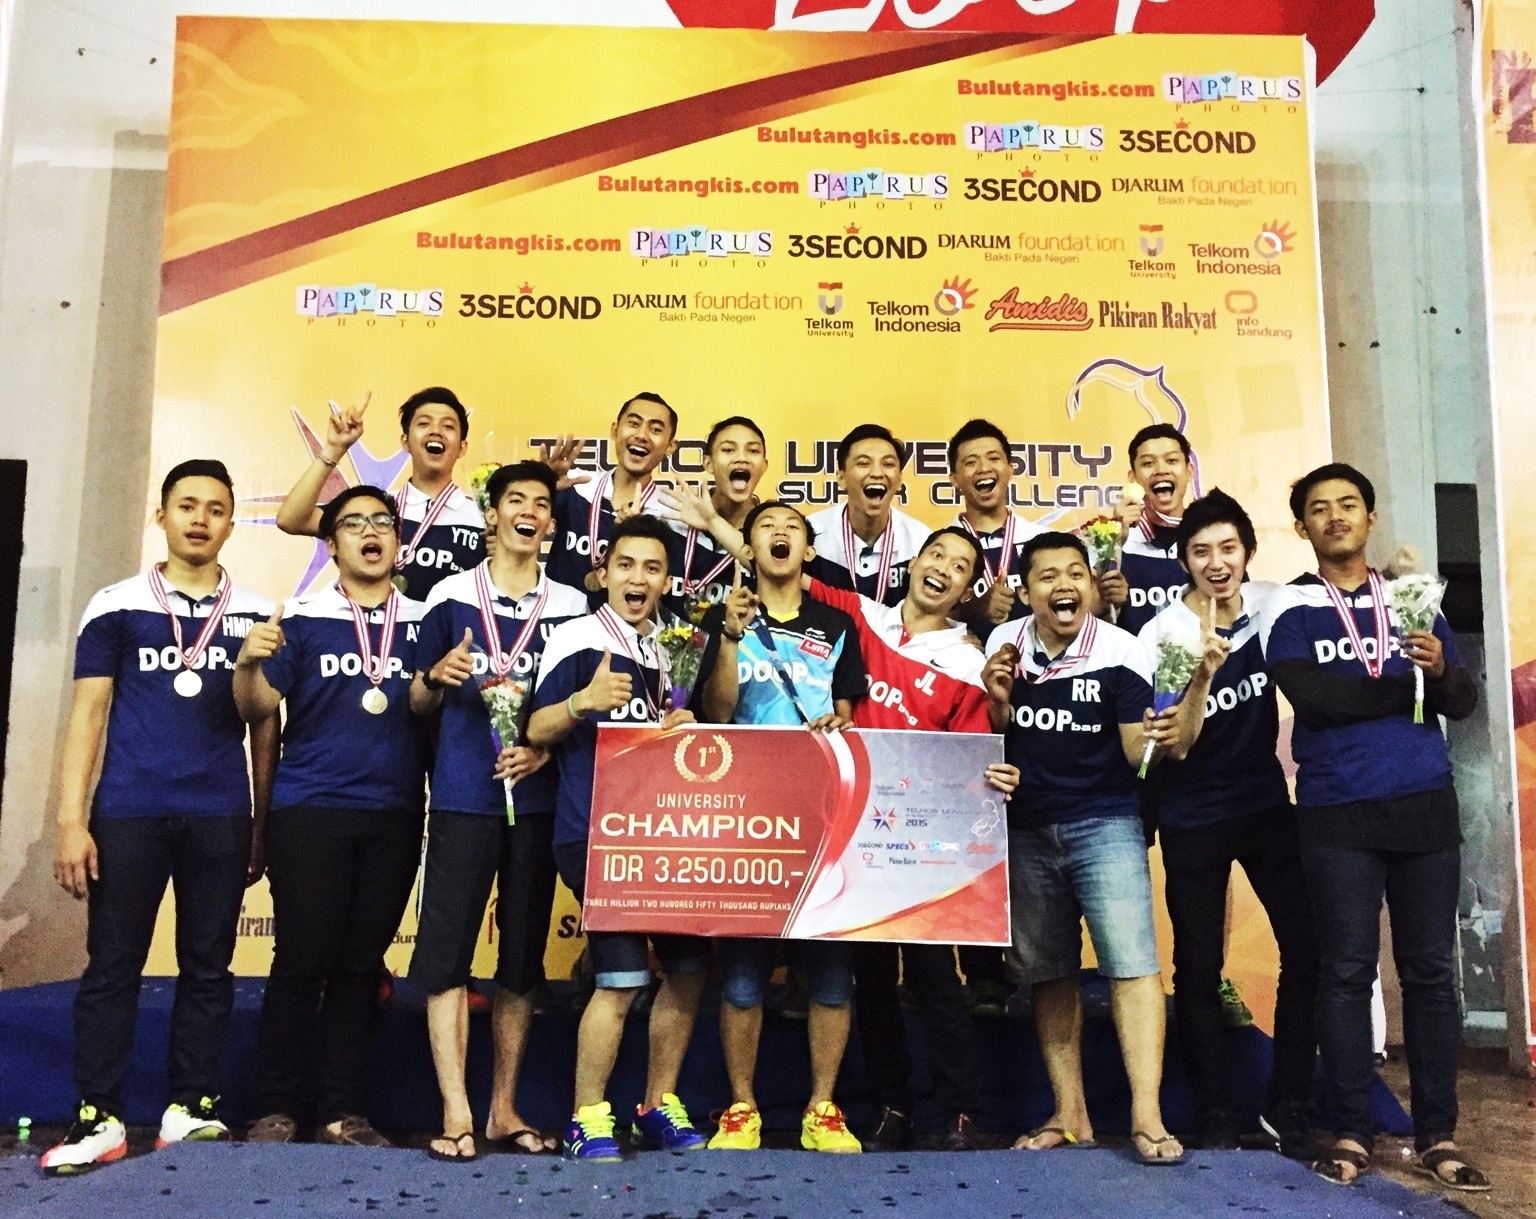 Juara I UKB - Tim Bulutangkis Raih Juara 1 Telkom Engineering Badminton Super Challenge 2015